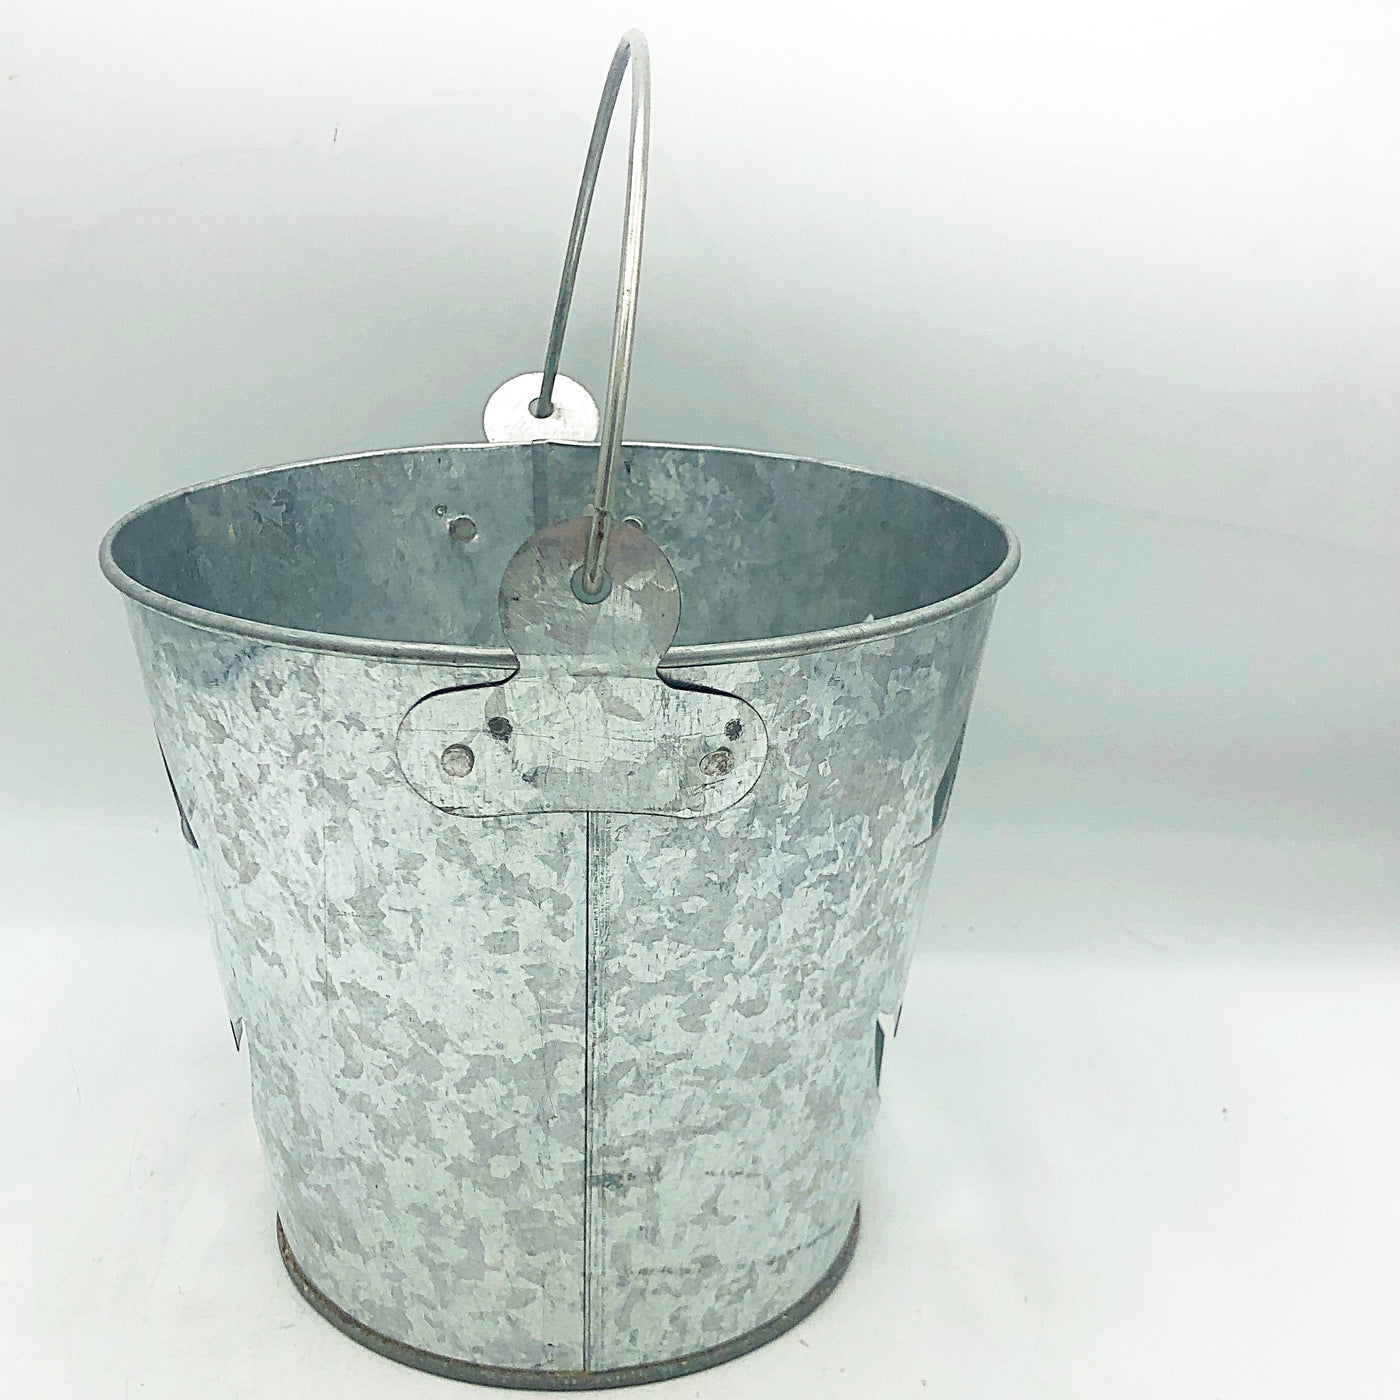 💙 Jack O'Lantern Galvanized Metal Bucket 6.25" H